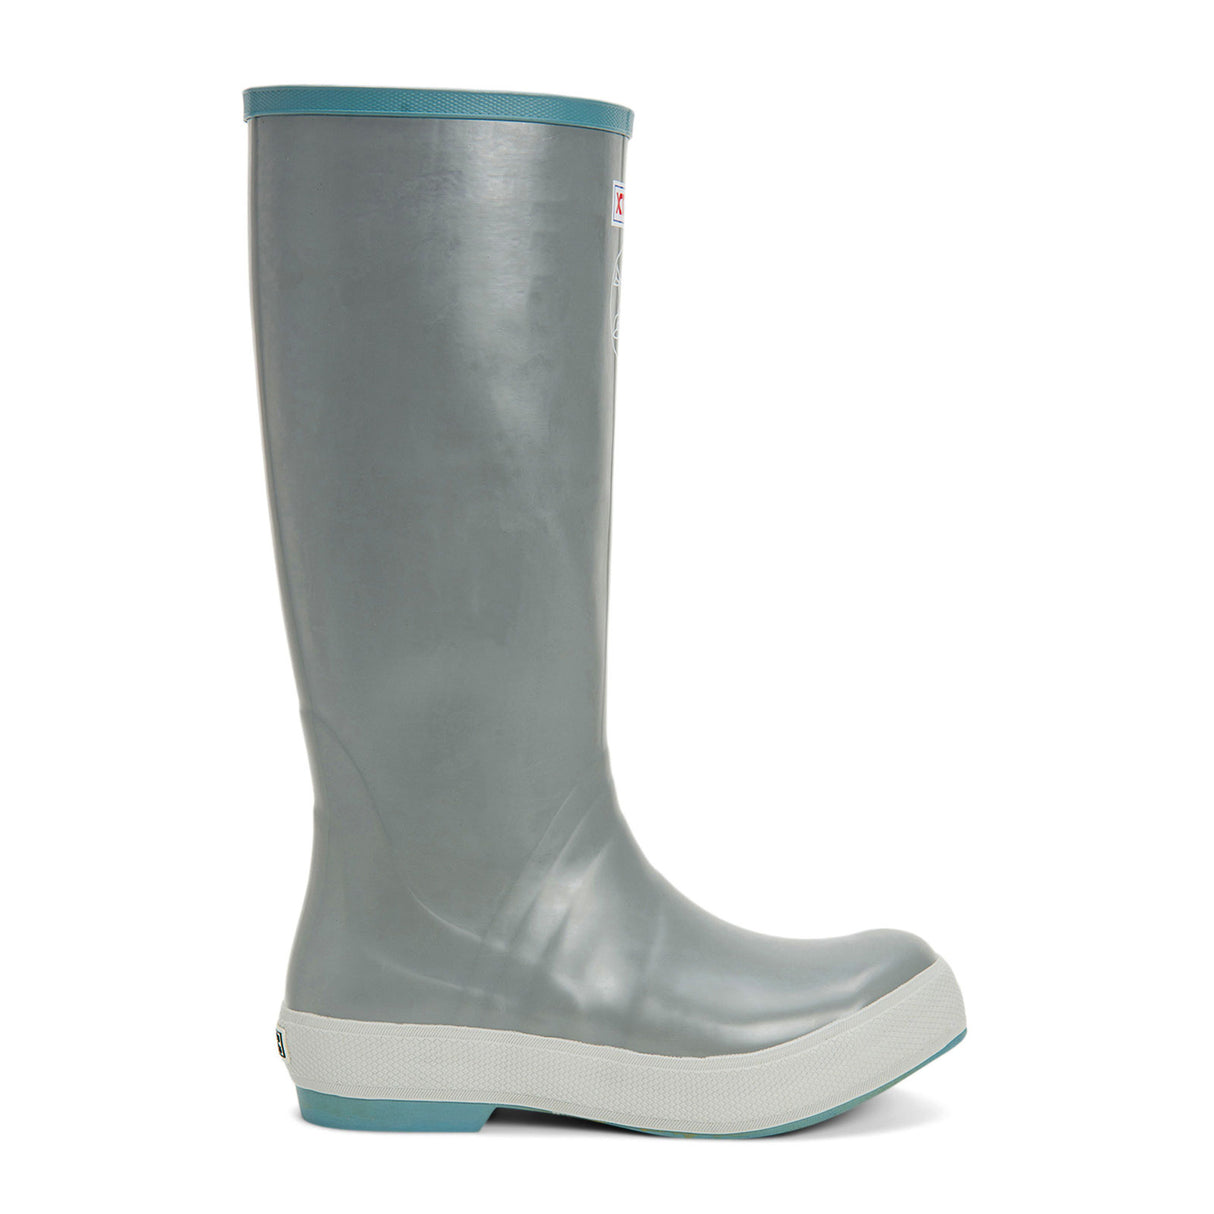 XtraTuf Salmon Sisters 15" Legacy Rain Boot (Women) - Gray/Sand Dollar Boots - Rain - Mid - The Heel Shoe Fitters